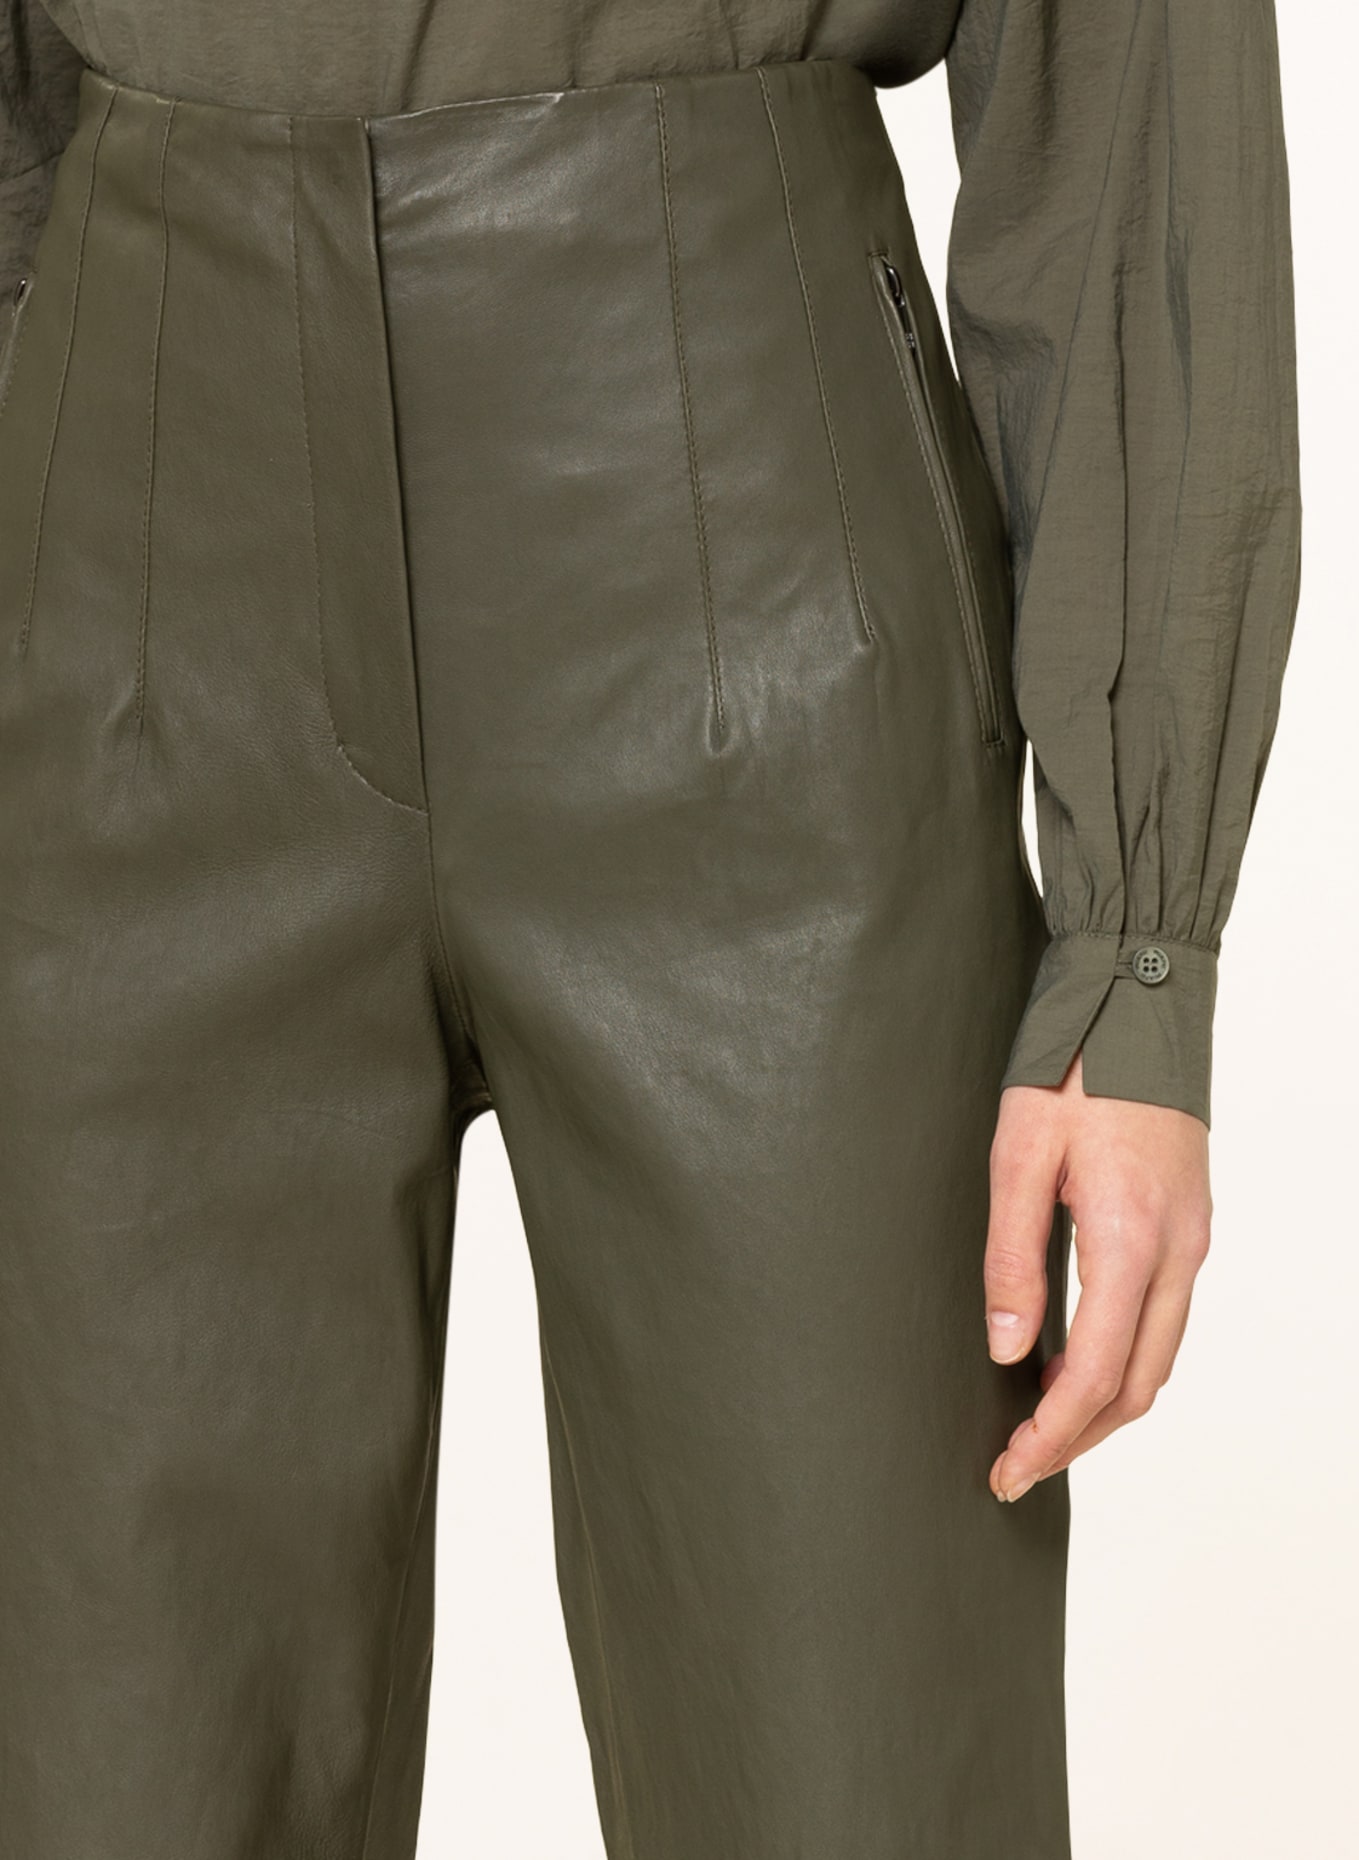 RIANI 7/8 trousers made of leather, Color: KHAKI (Image 5)